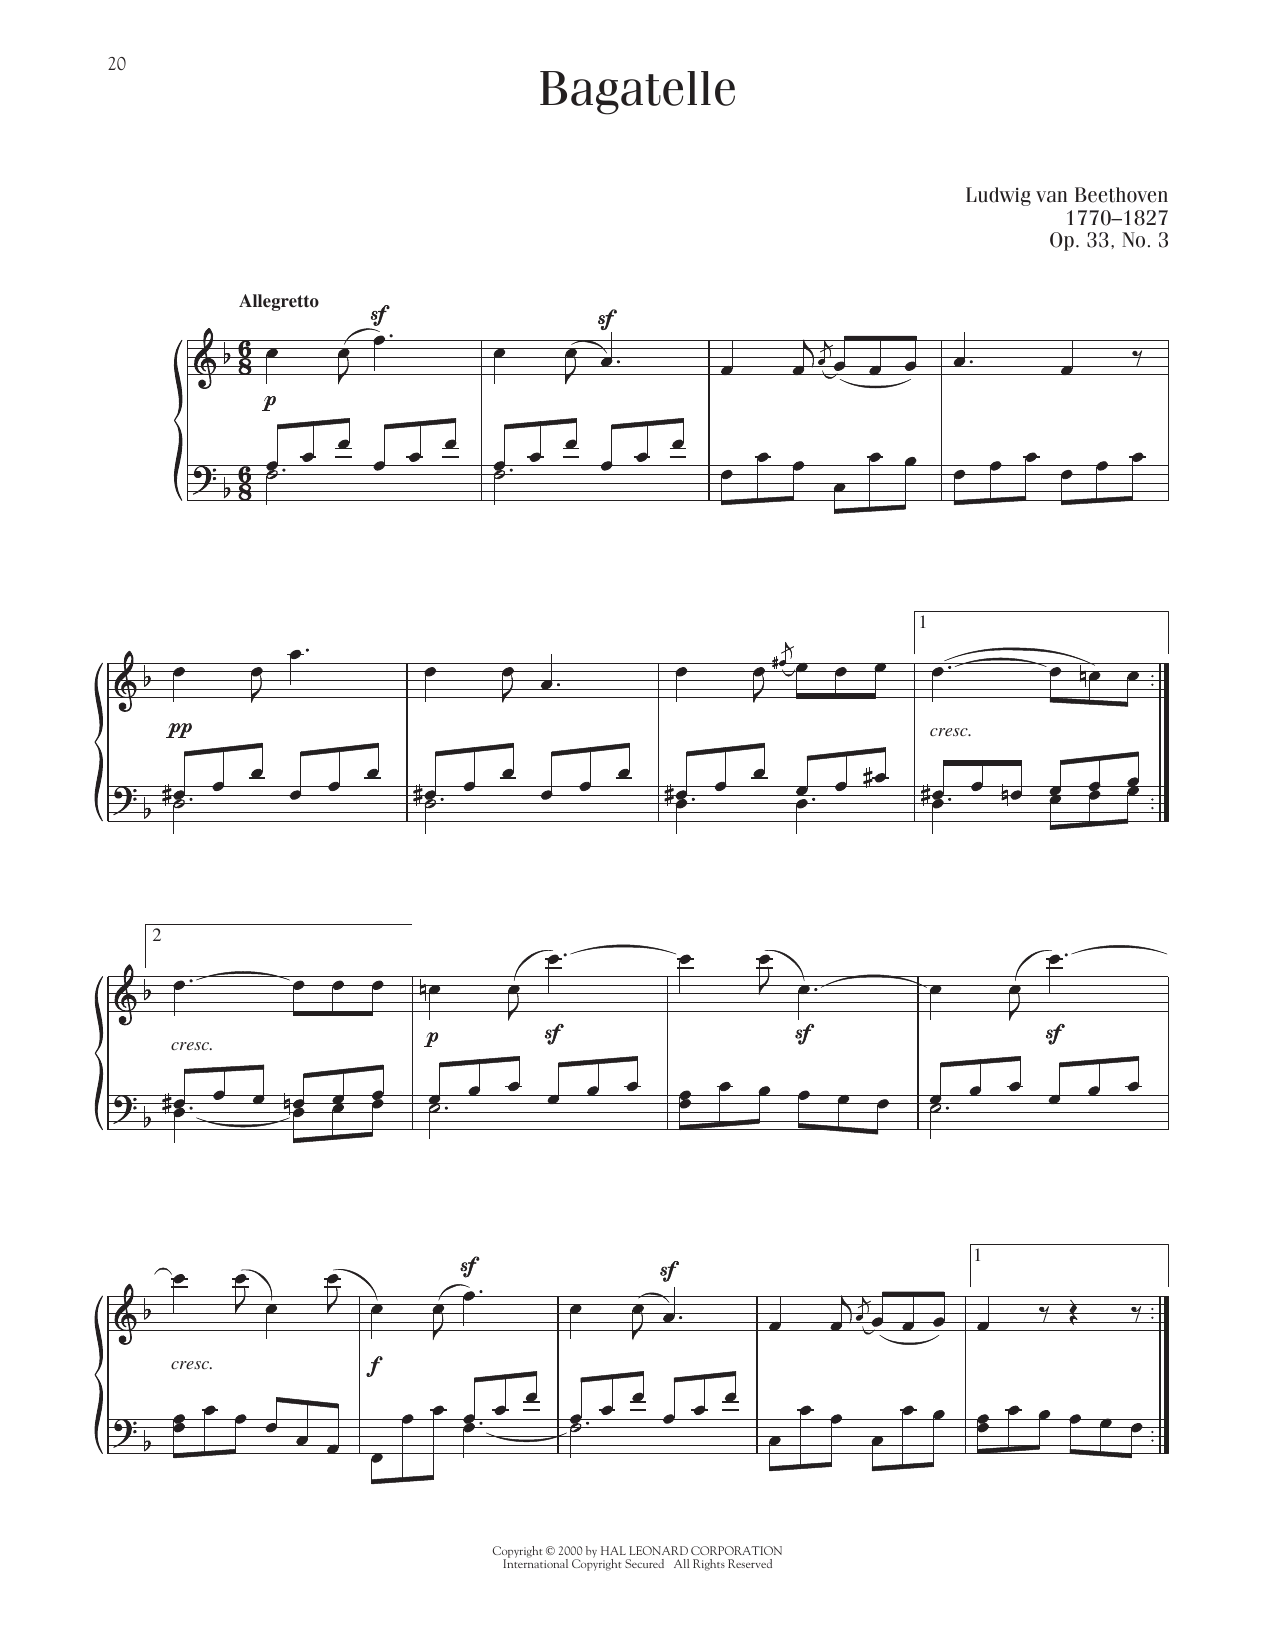 Ludwig van Beethoven Bagatelle In F Major, Op. 33, No. 3 sheet music notes printable PDF score